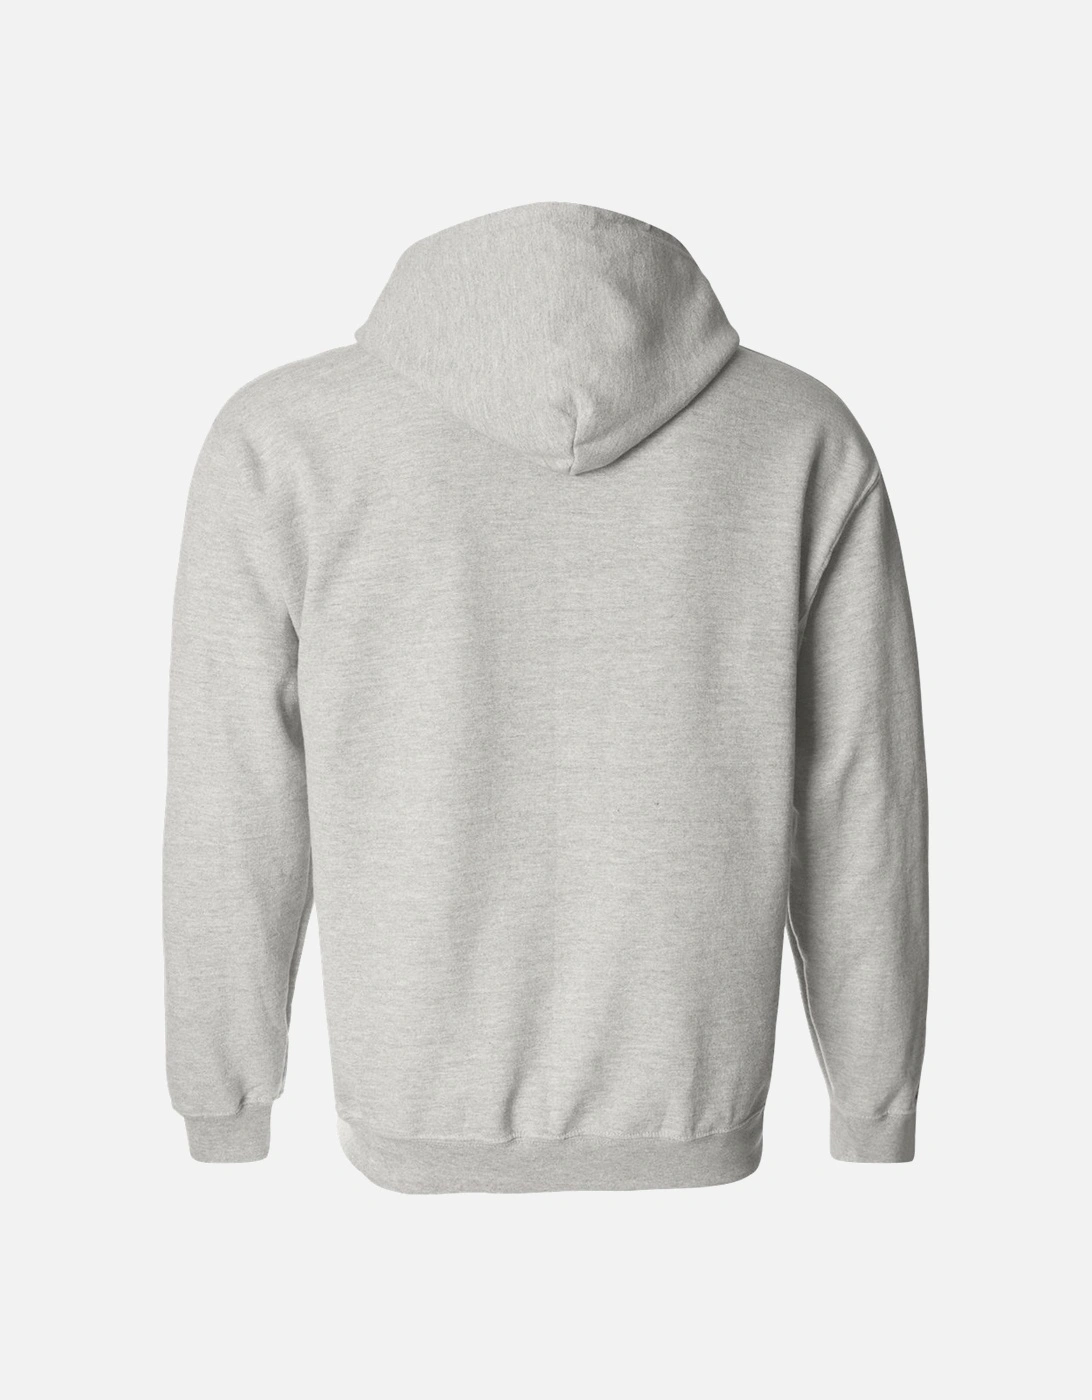 Heavy Blend Unisex Adult Full Zip Hooded Sweatshirt Top